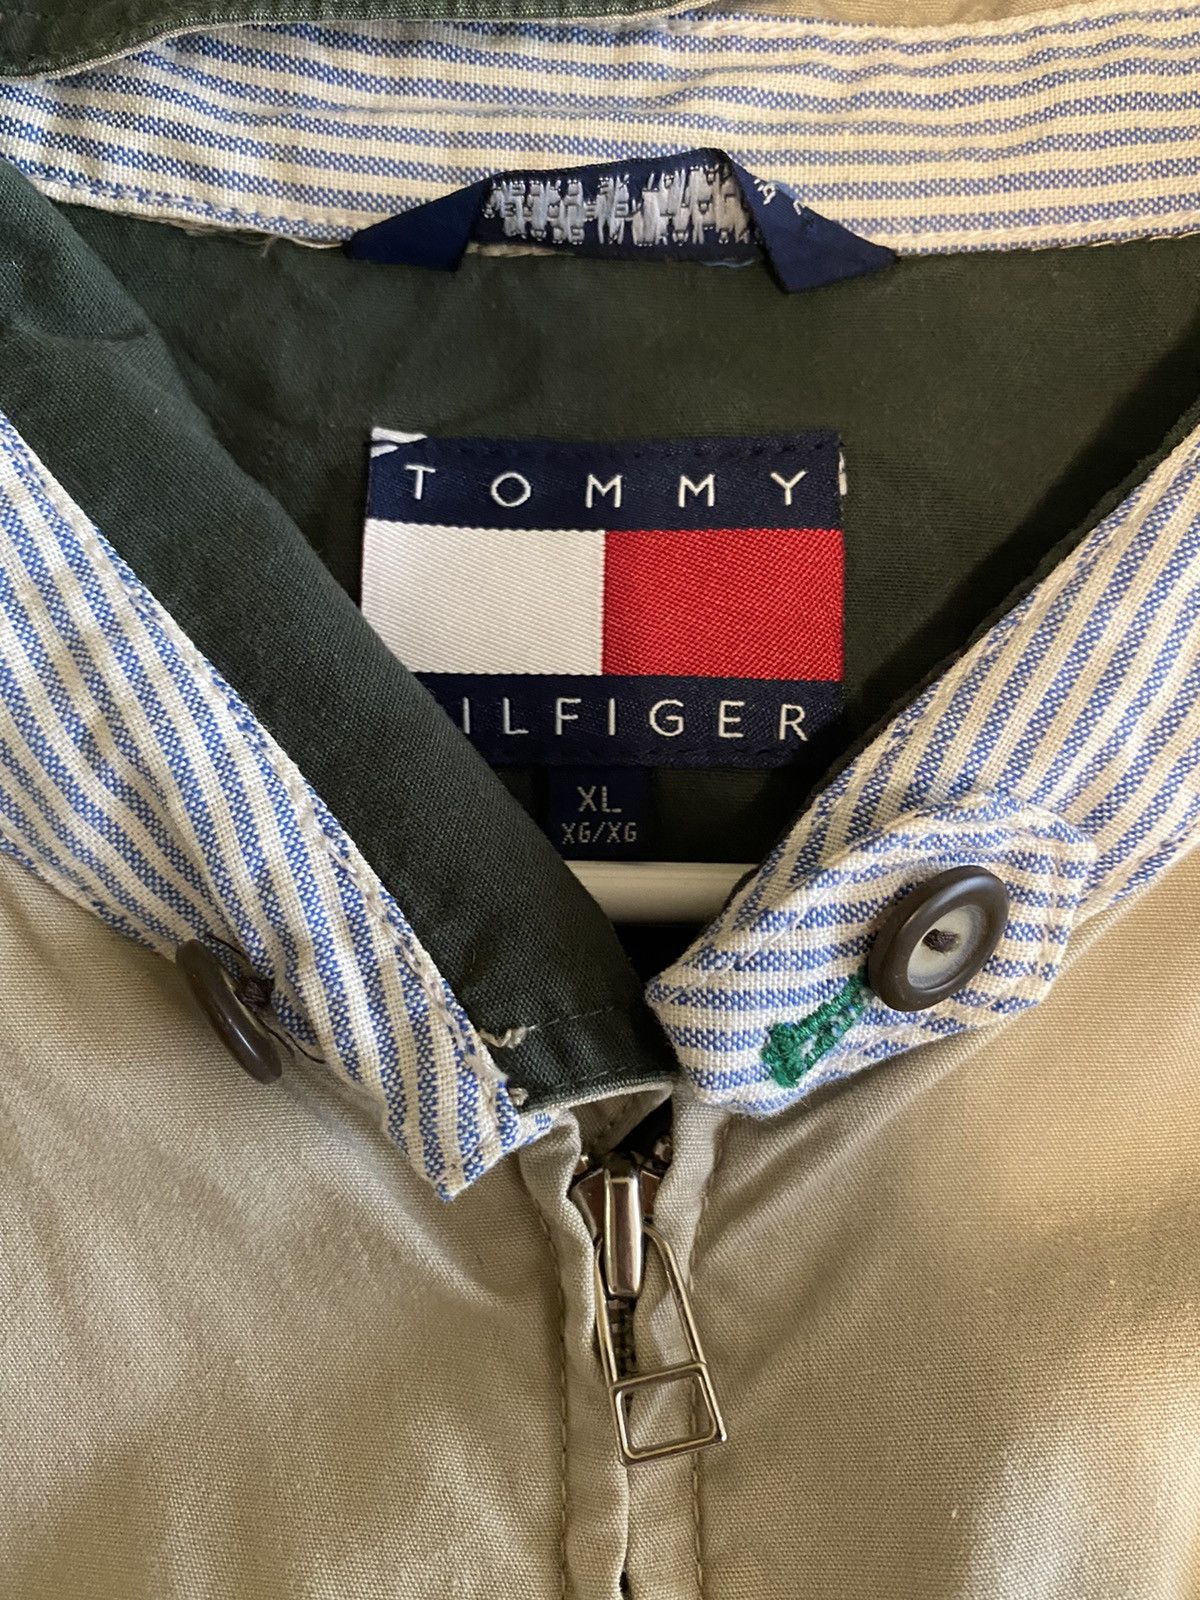 Tommy Hilfiger Vintage Tommy Hilfiger Windbreaker Size US XL / EU 56 / 4 - 2 Preview